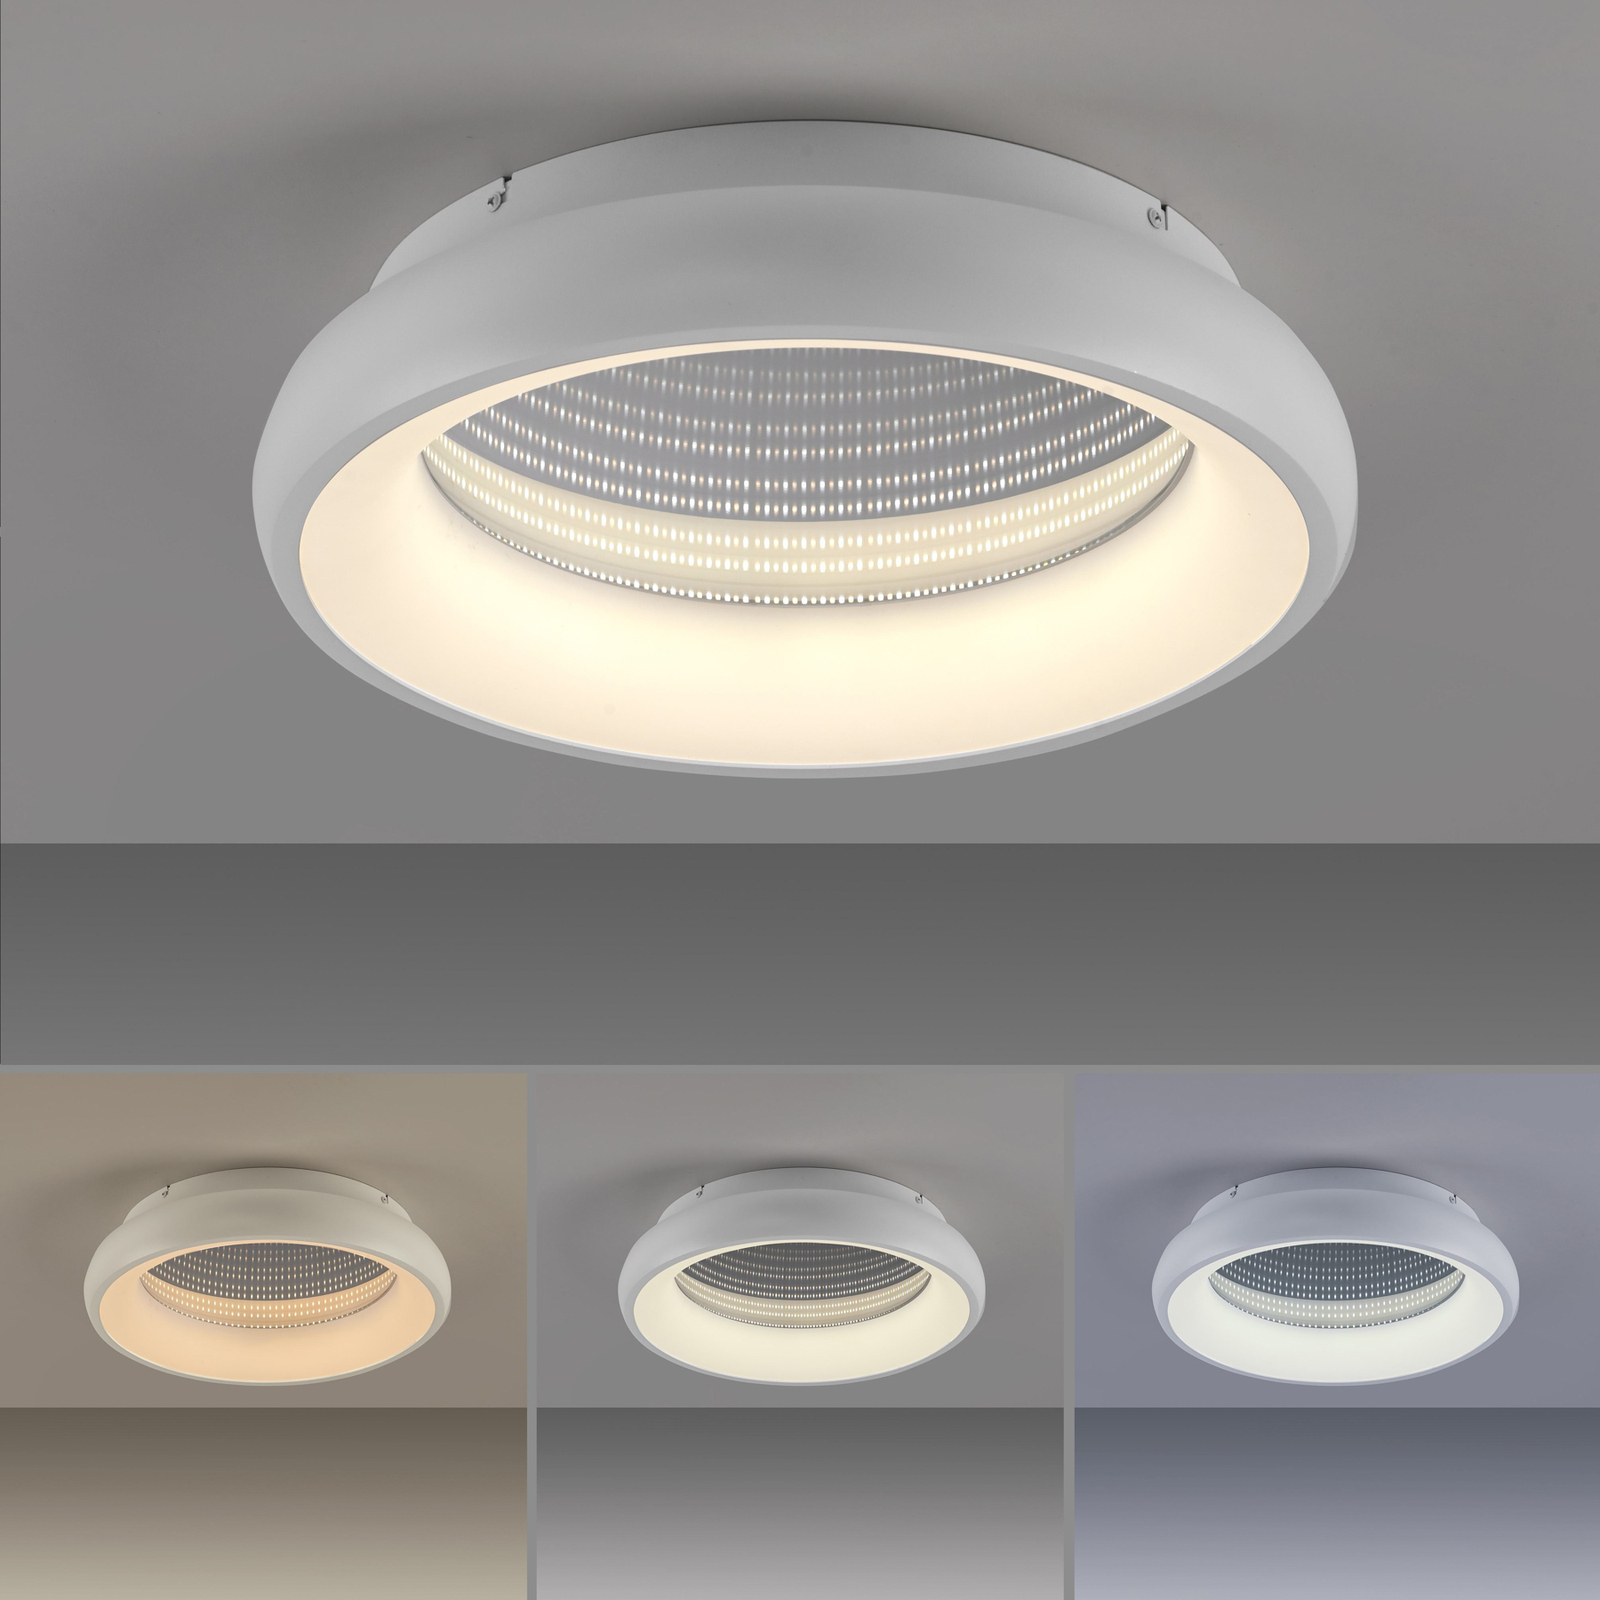 JUST LIGHT. Speccio LED ceiling light, CCT, remote control